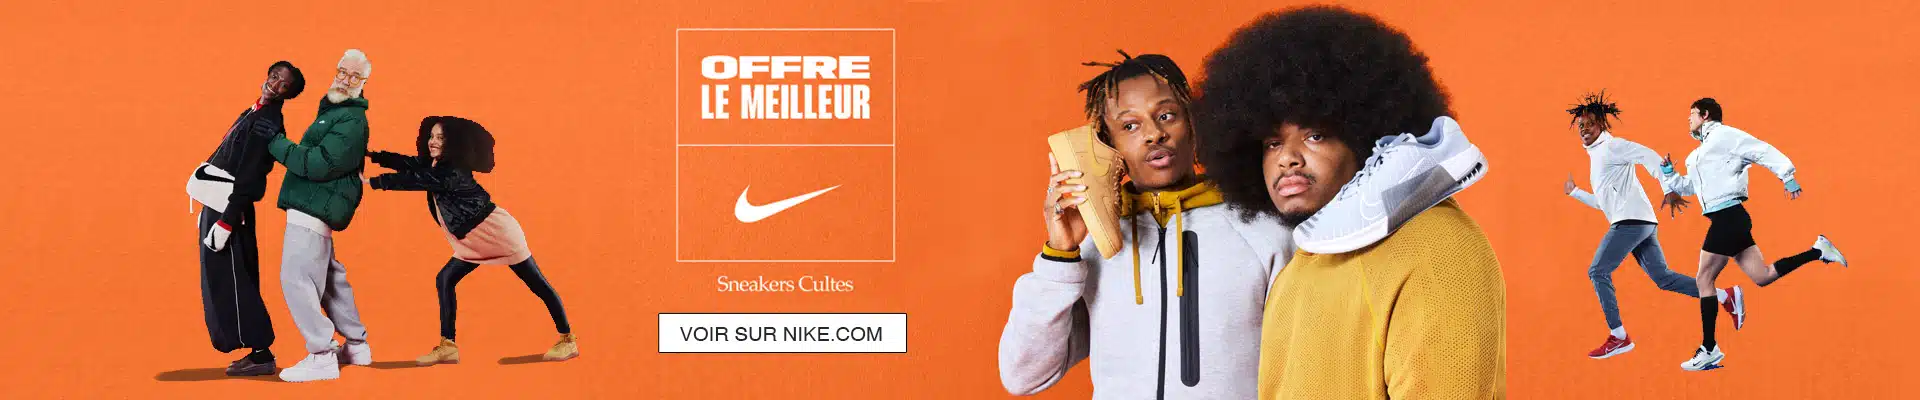 Nike Gifting